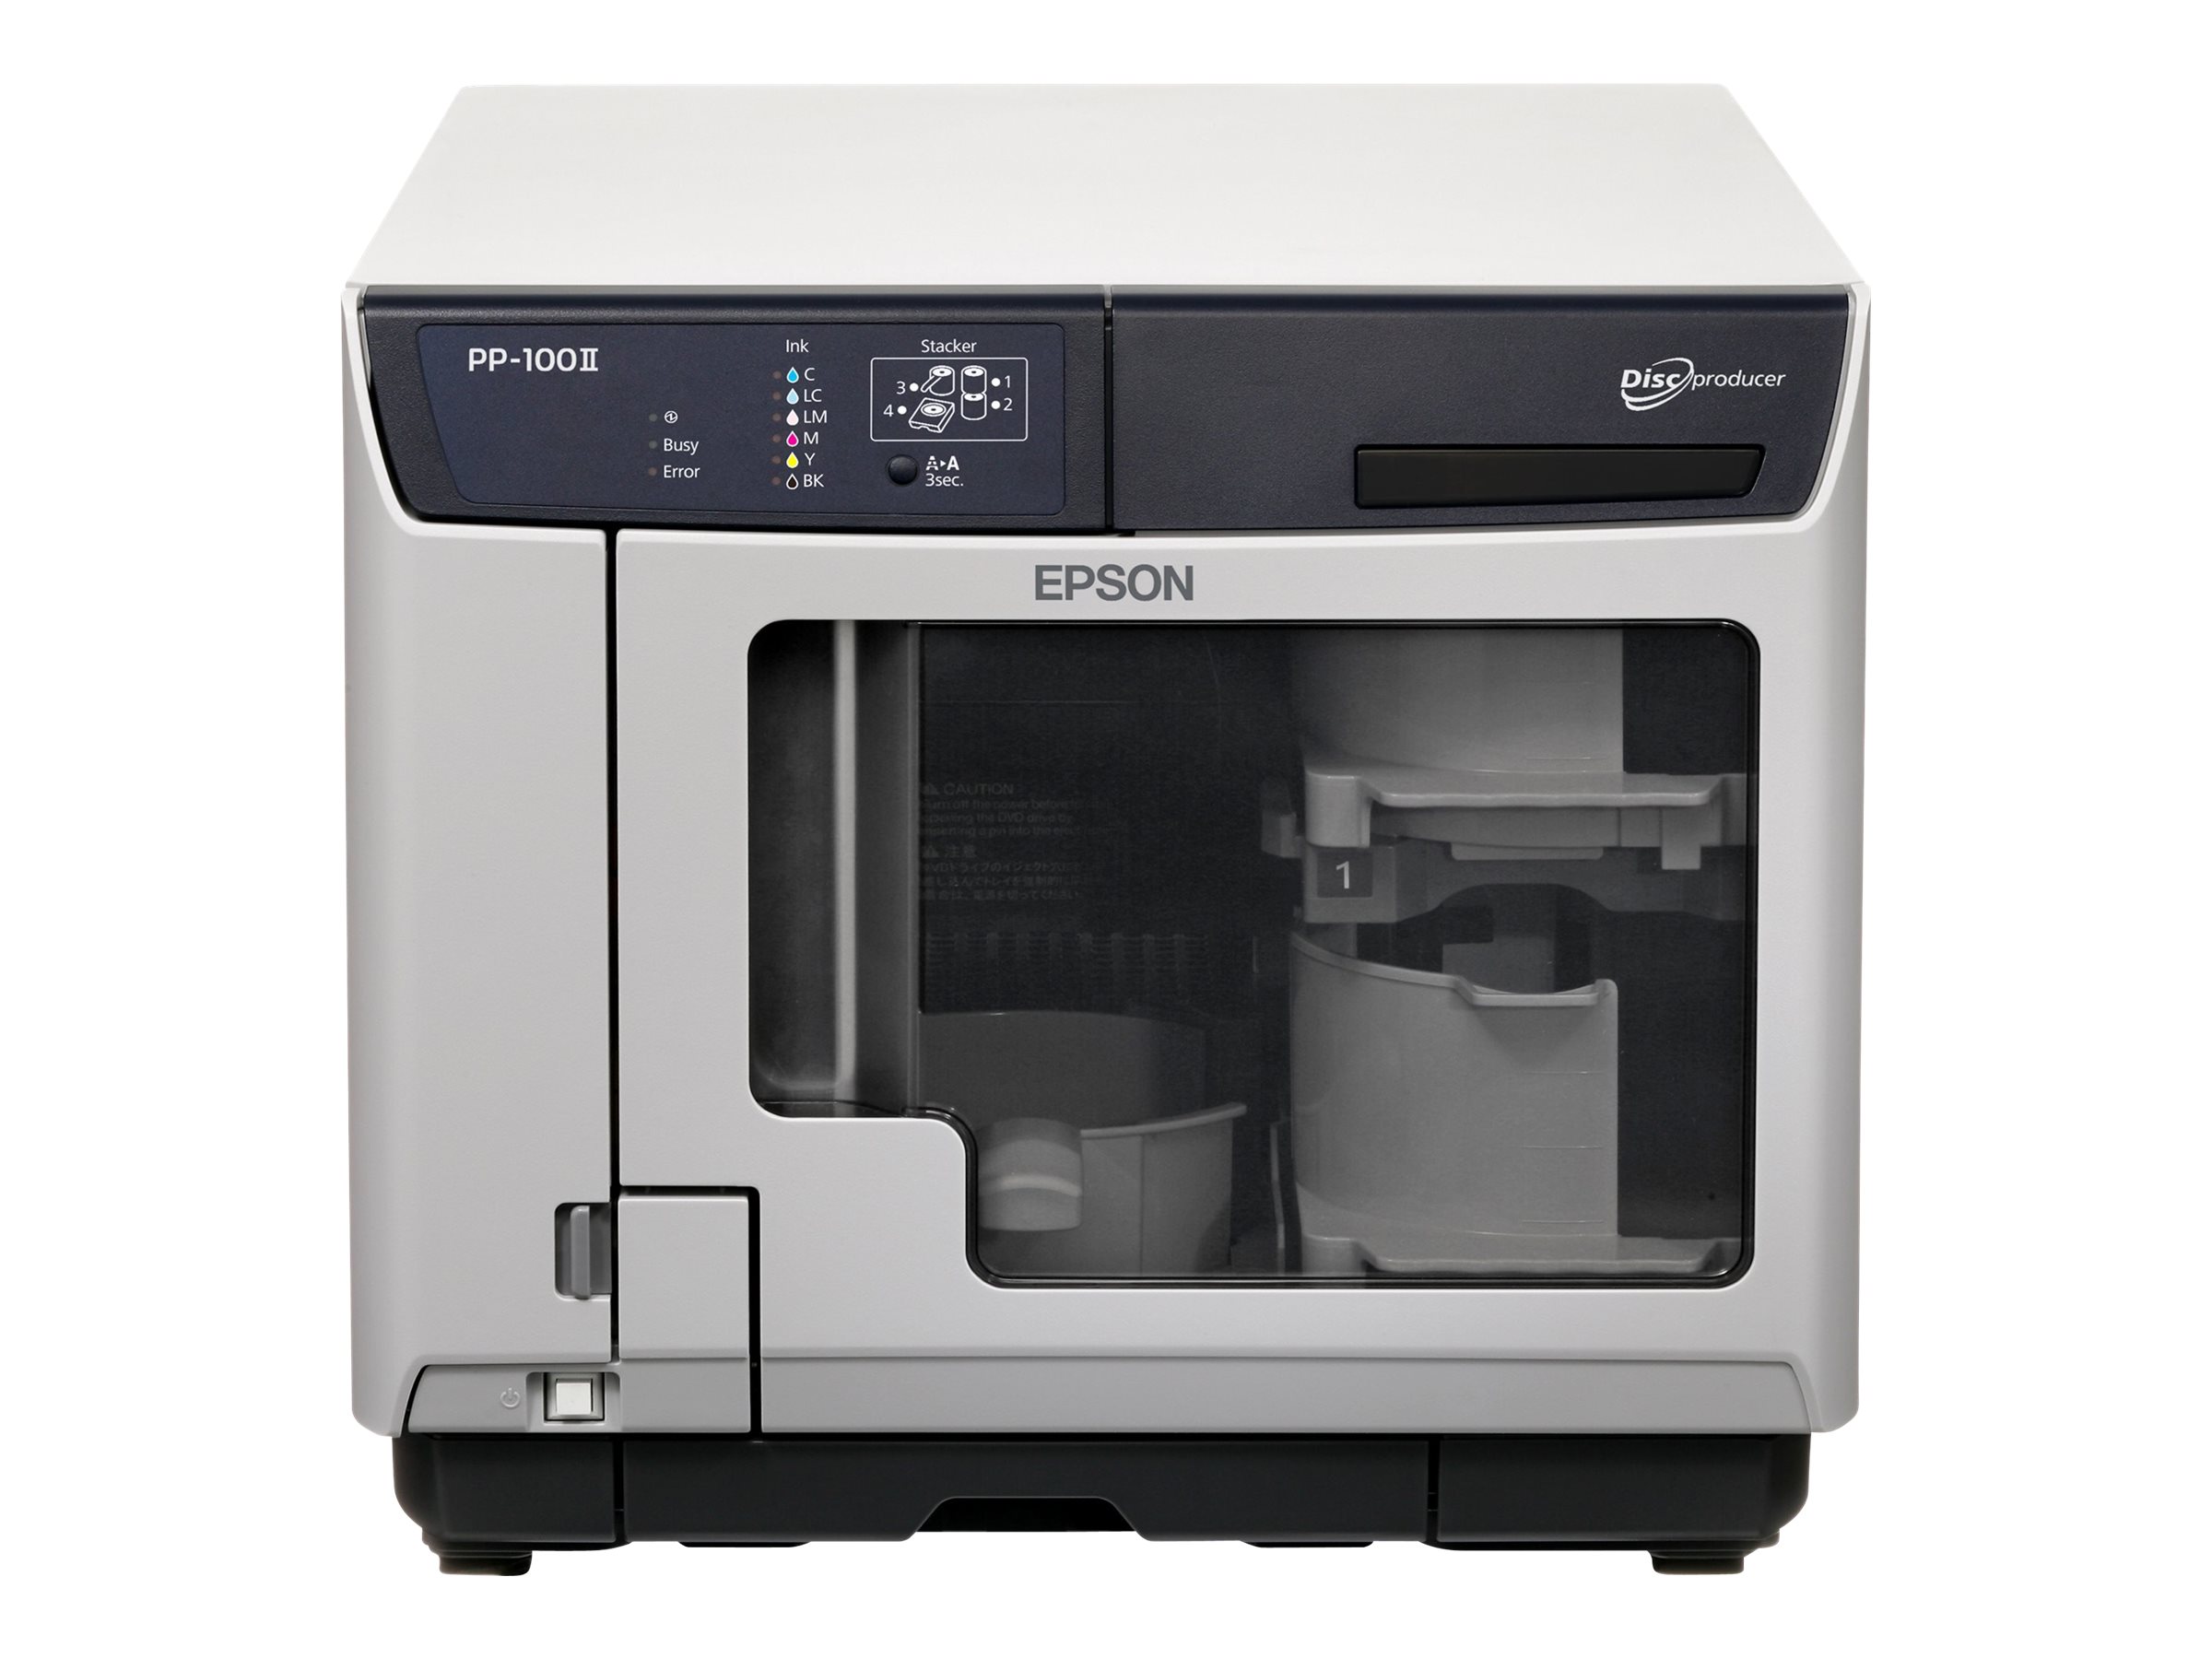 Epson Discproducer PP-50II - Disk-Kopiergerät